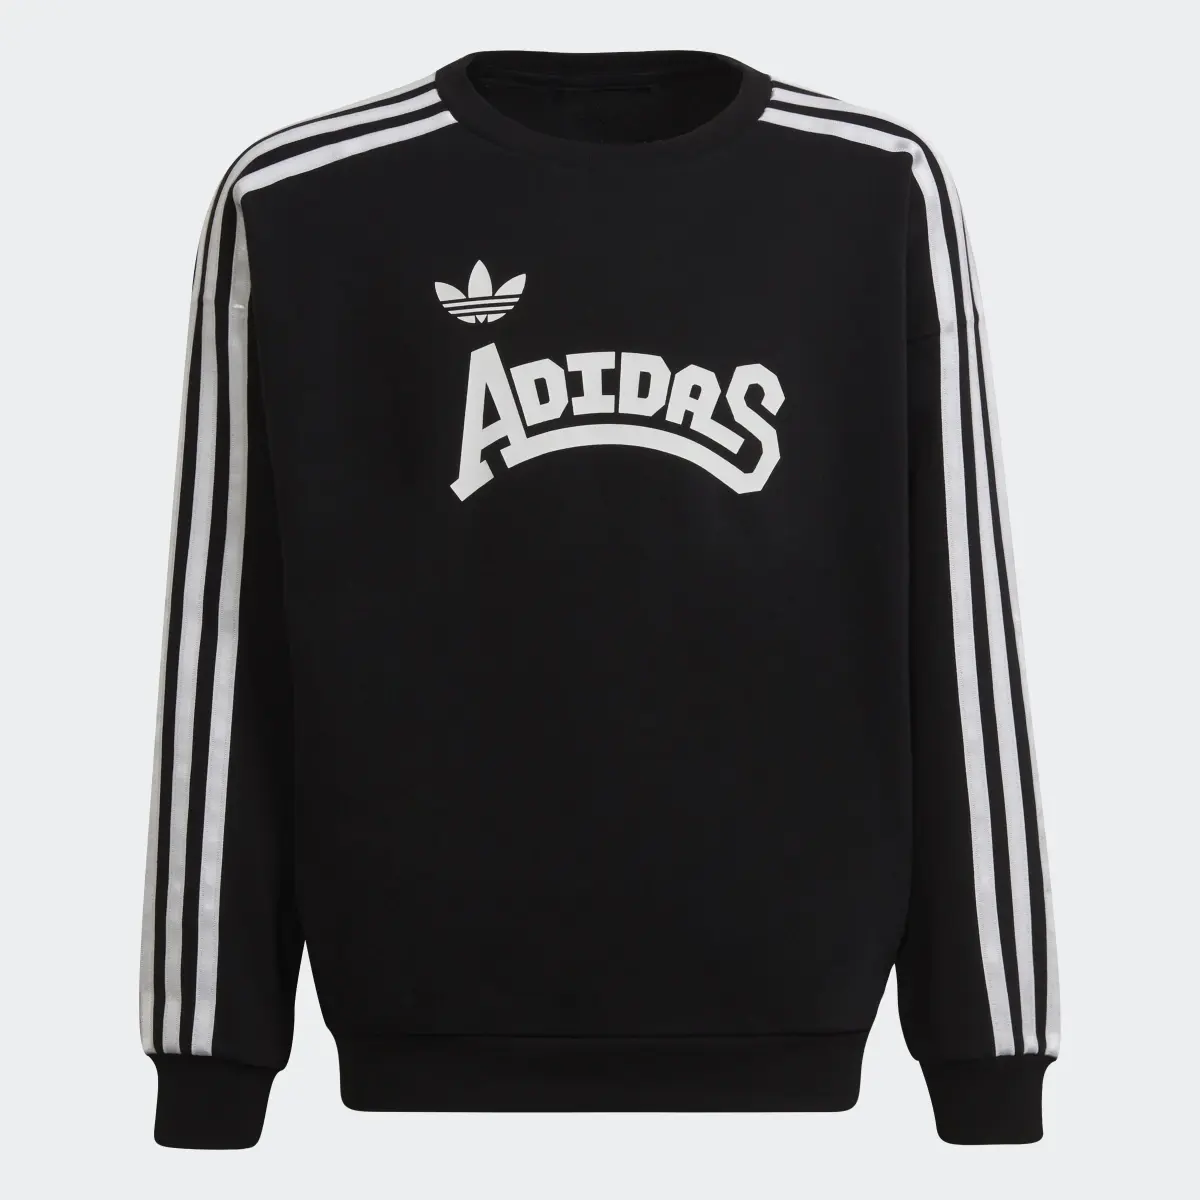 Adidas Graphic Crew Sweatshirt. 1